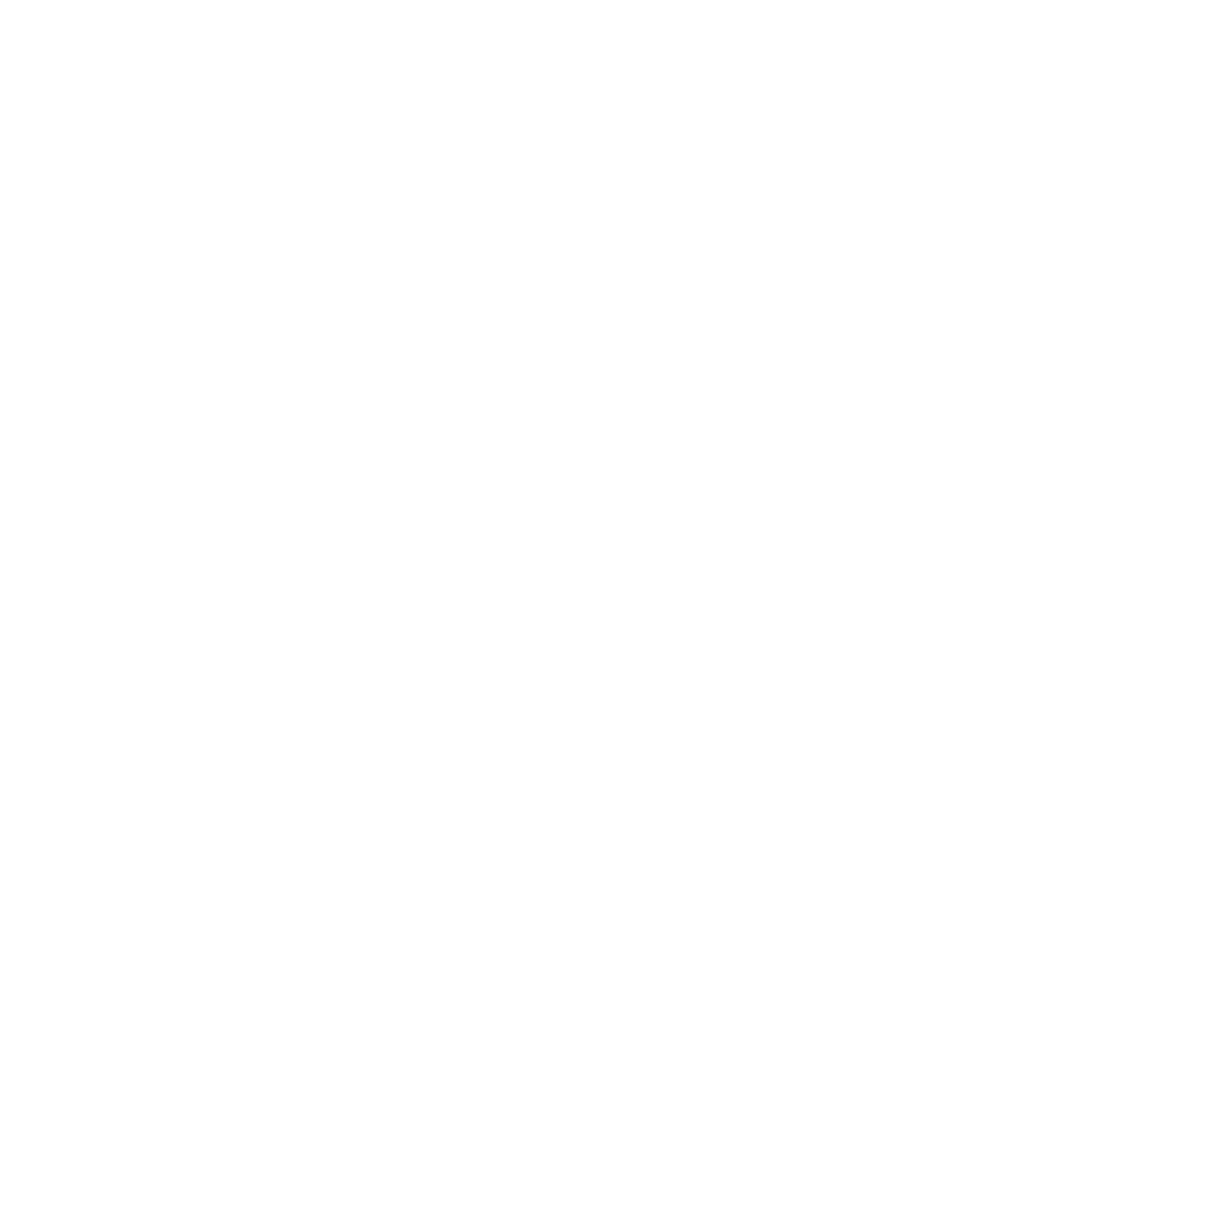 Build The Best